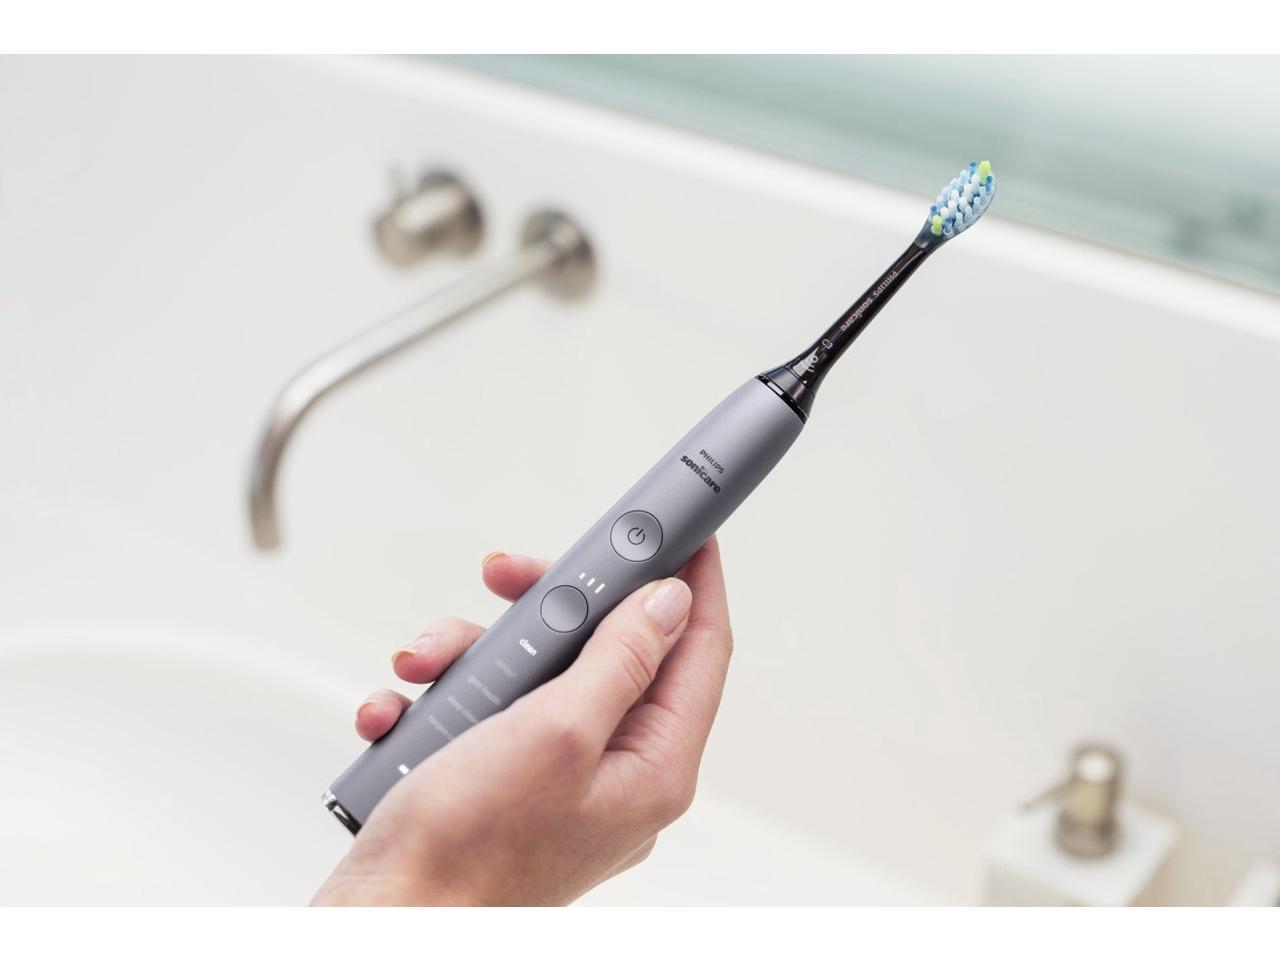 Philips DiamondClean Smart 9500 (HX9924/41) Sonicare Sonic electric toothbrush